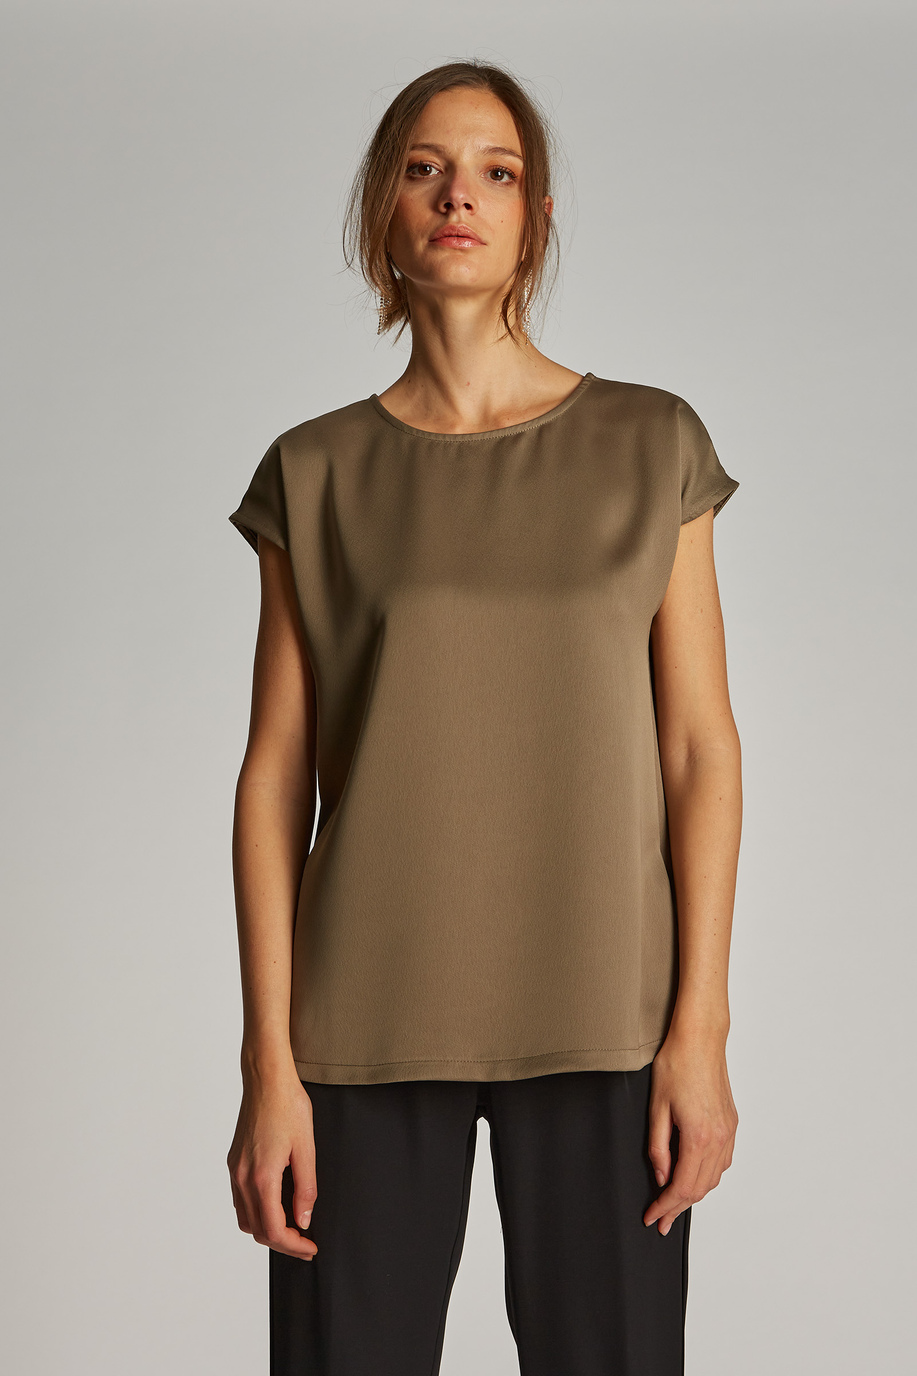 Women's short-sleeved shirt in silk-look crepe fabric